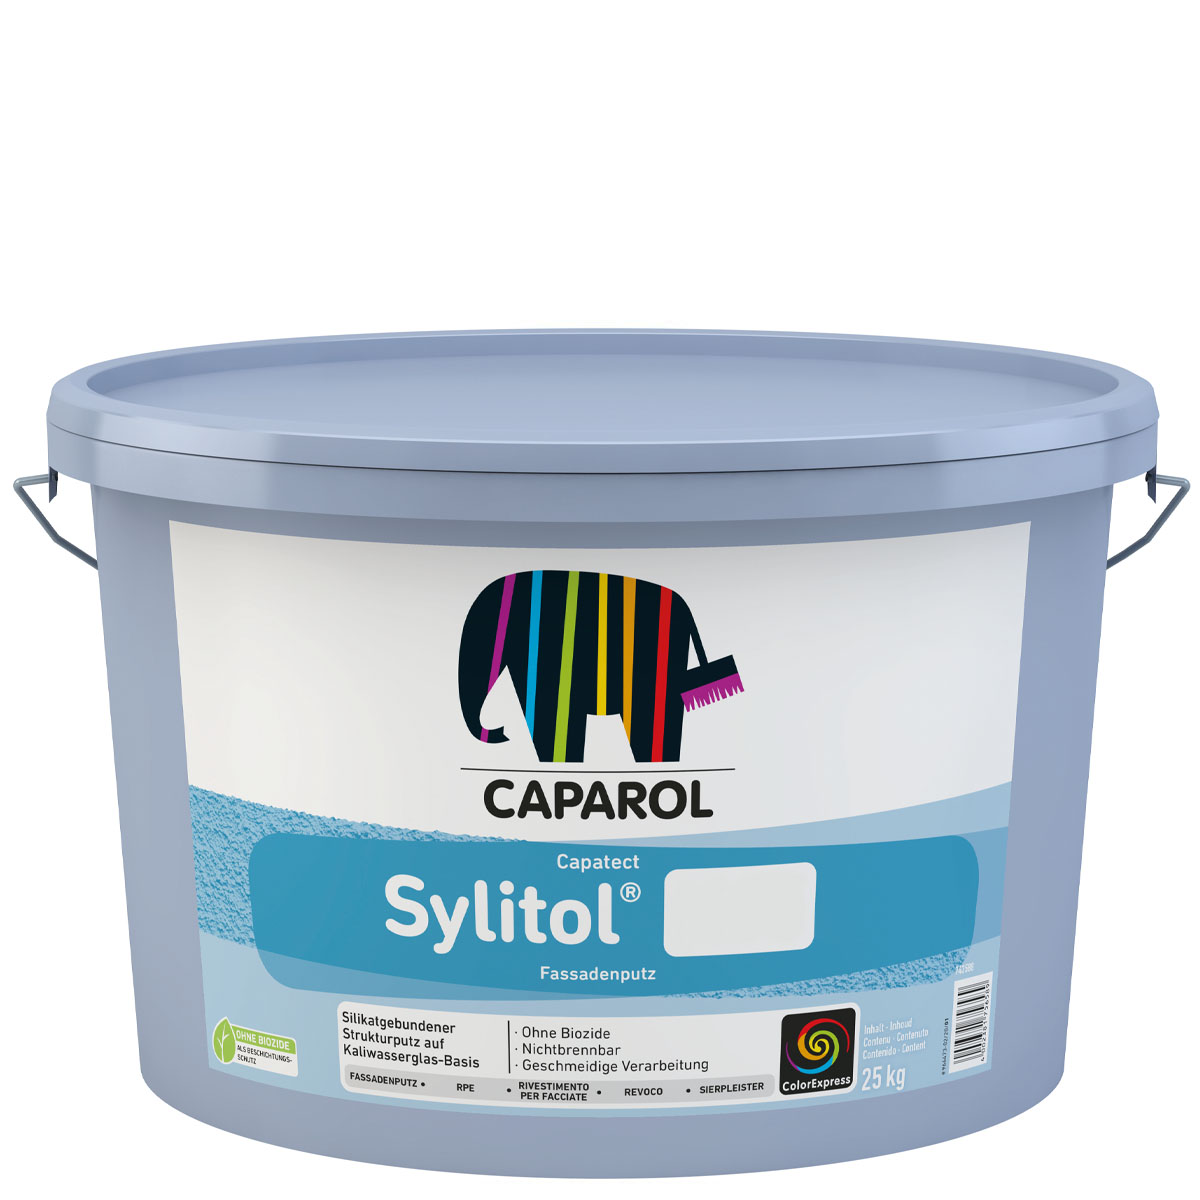 Caparol Capatect Sylitol Fassadenputz K20 (2mm) 25kg, weiss